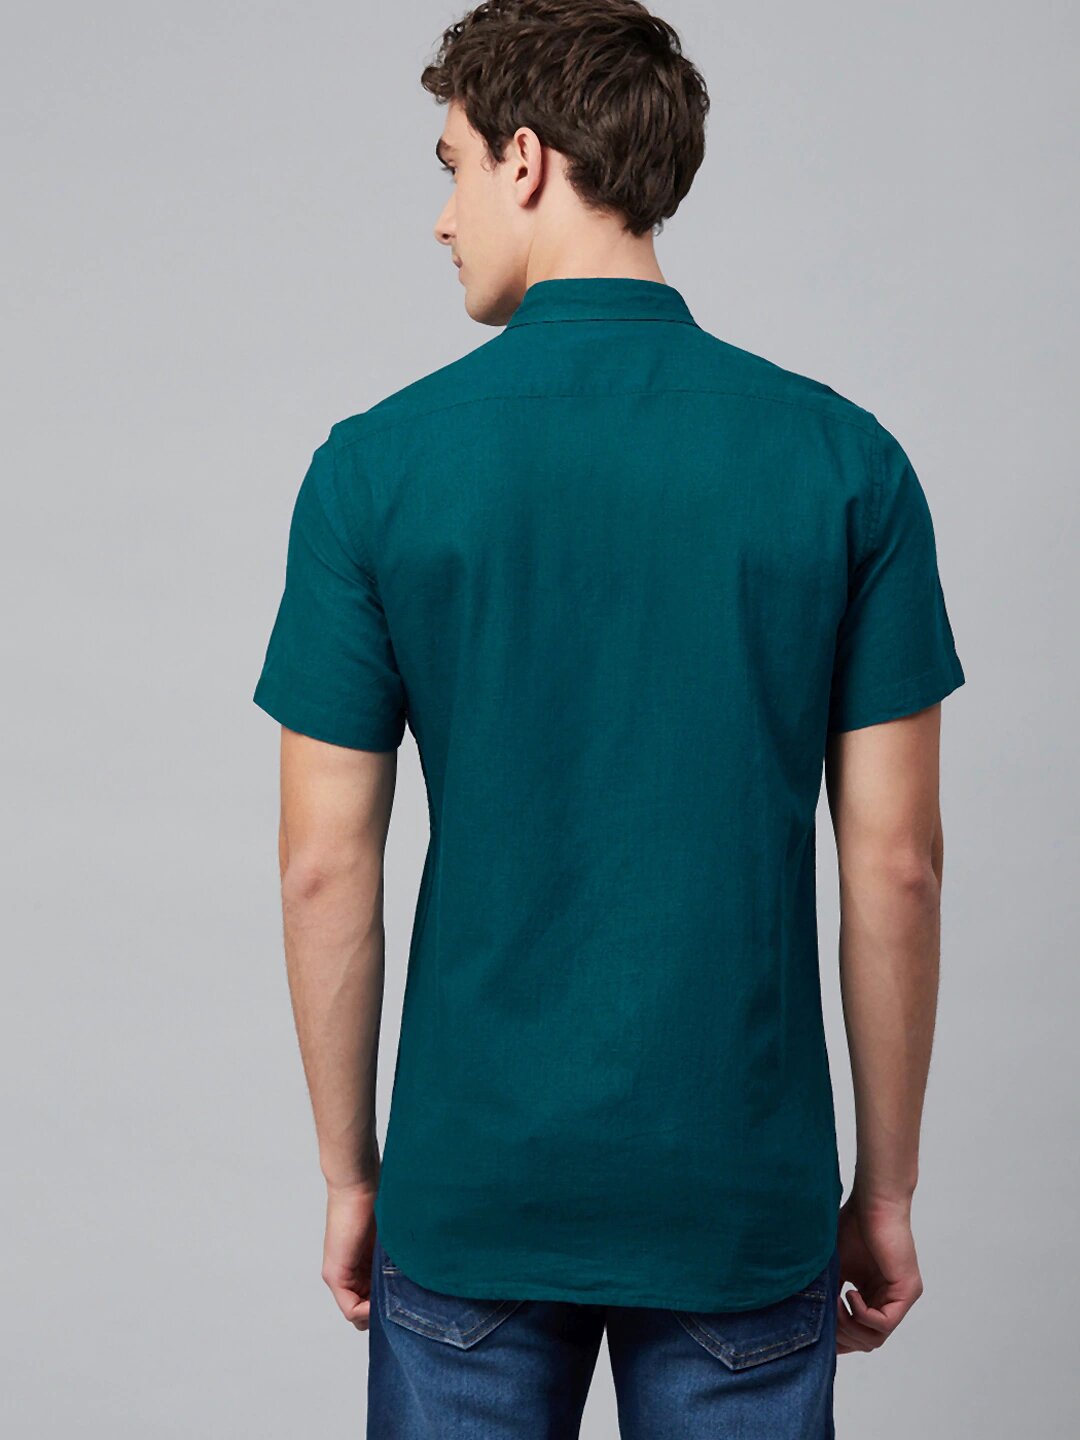 Men Teal Green Smart Slim Fit Solid Cotton Linen Casual Shirt